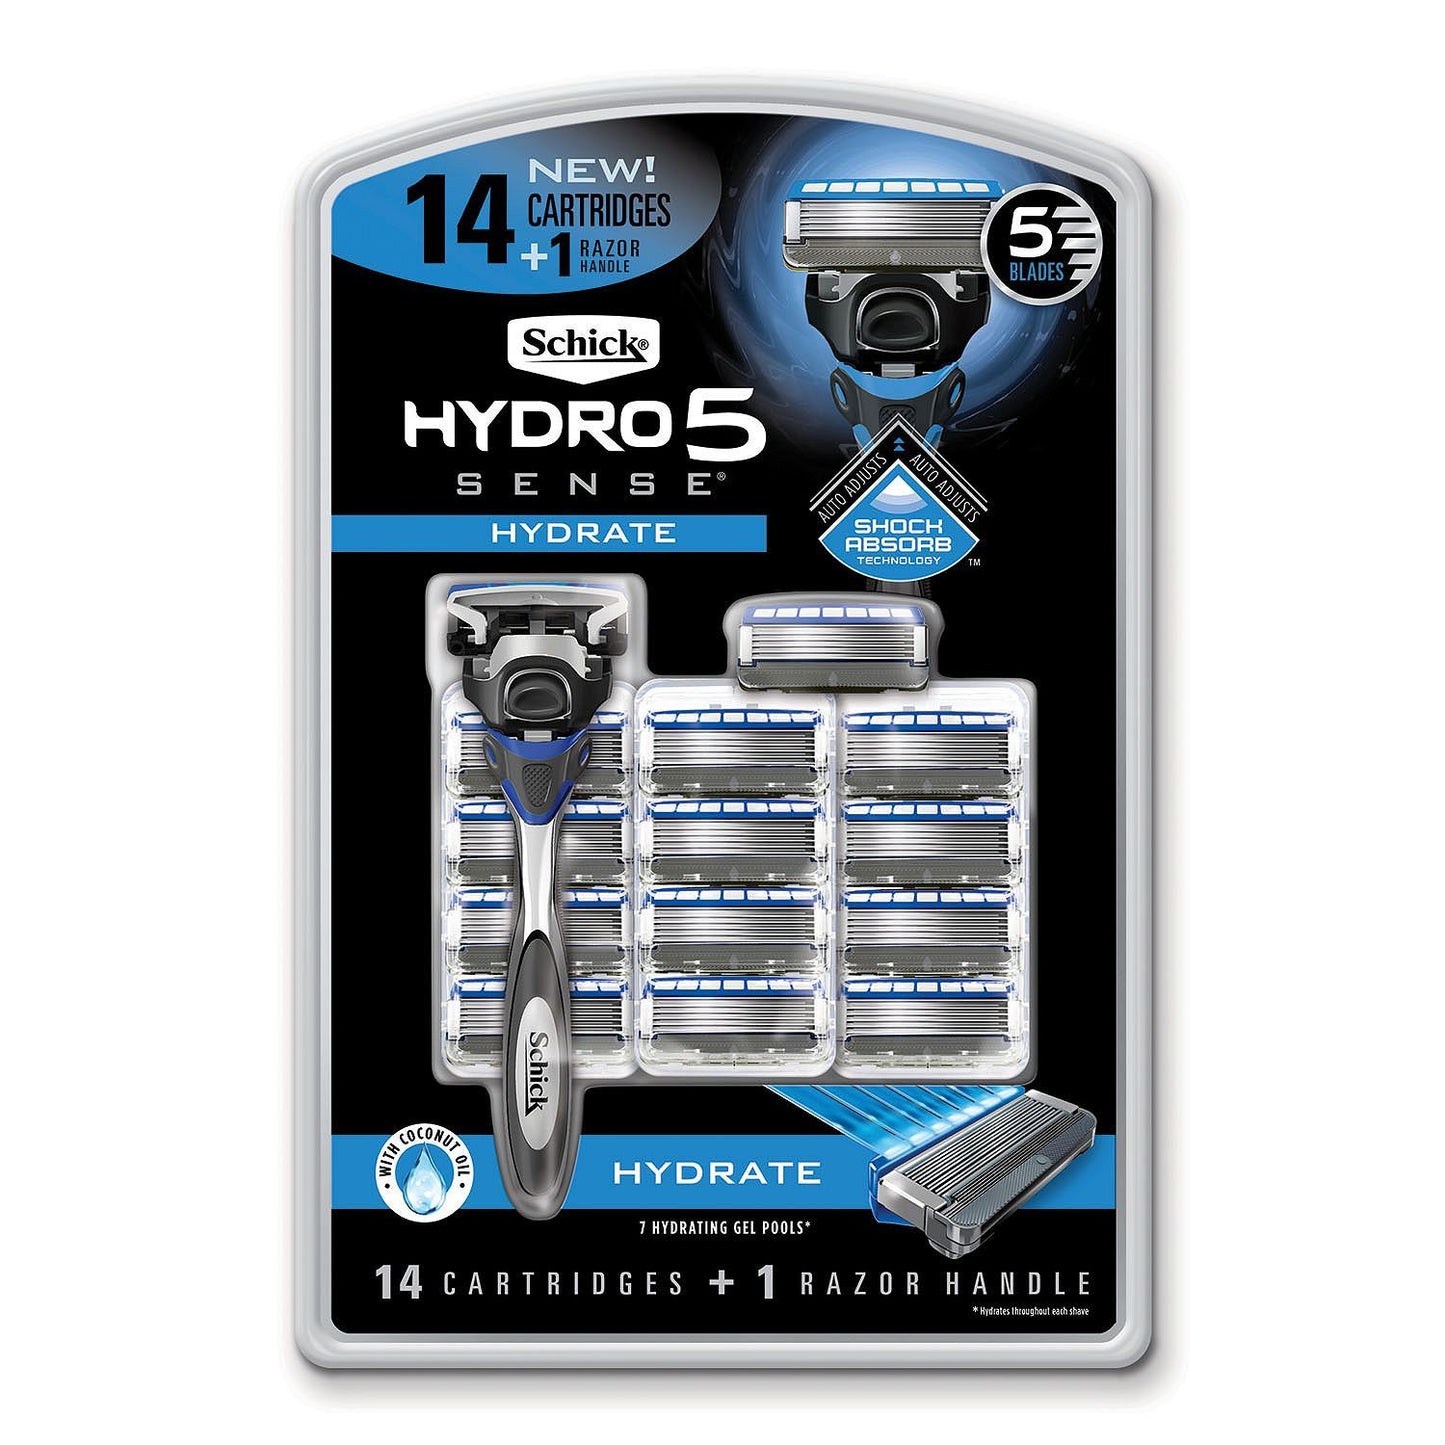 Schick Hydro 5 Sense Hydrate Razor (1 handle, 14 cartridges)